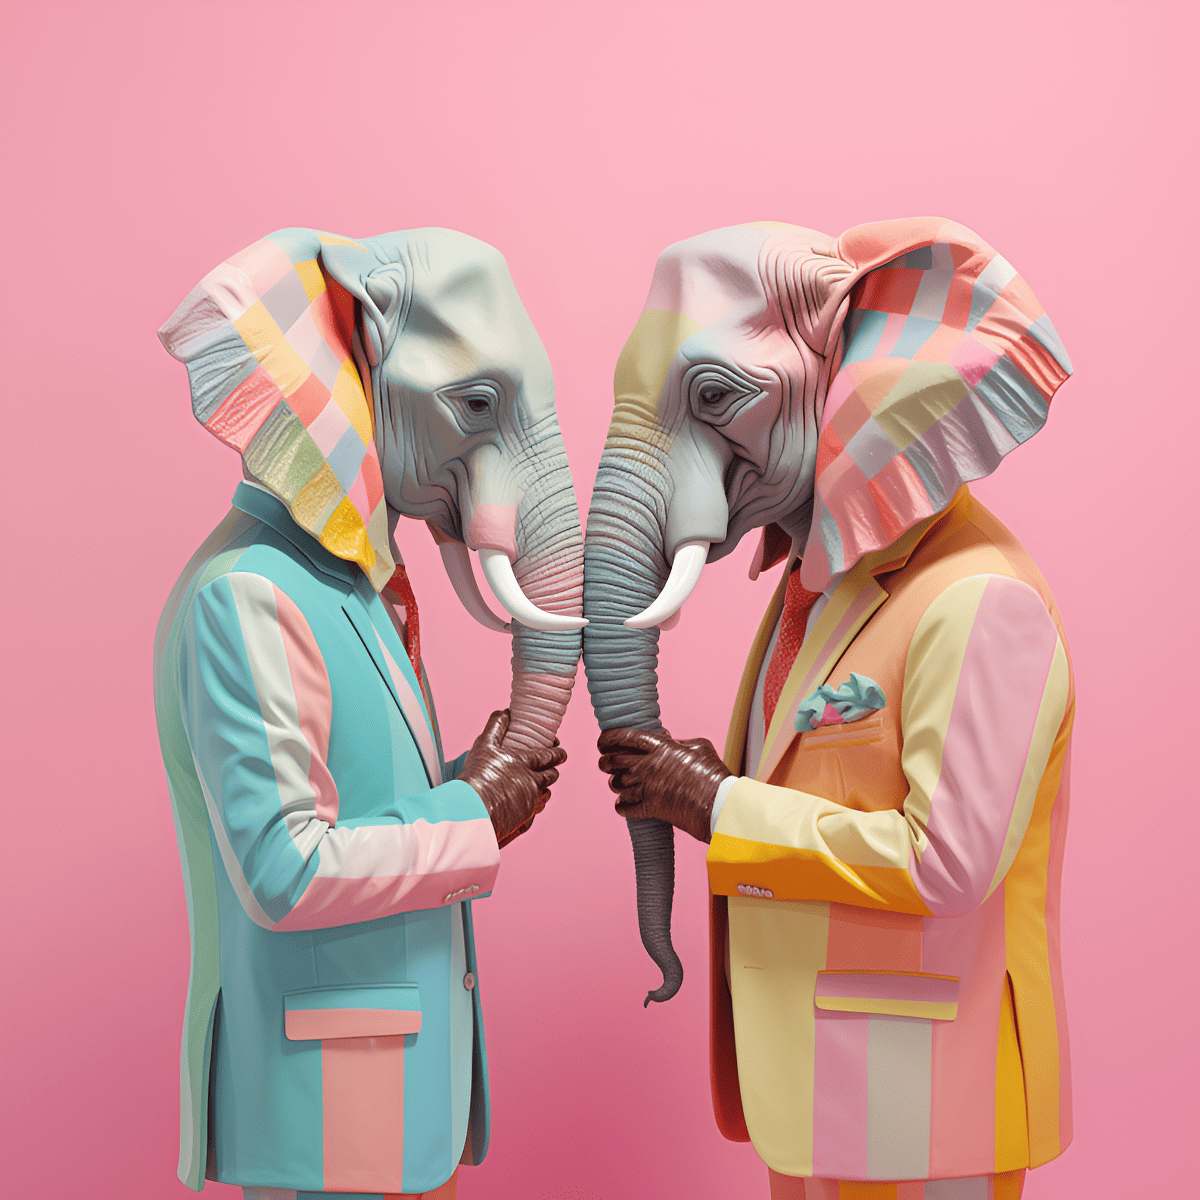 Elephants talking